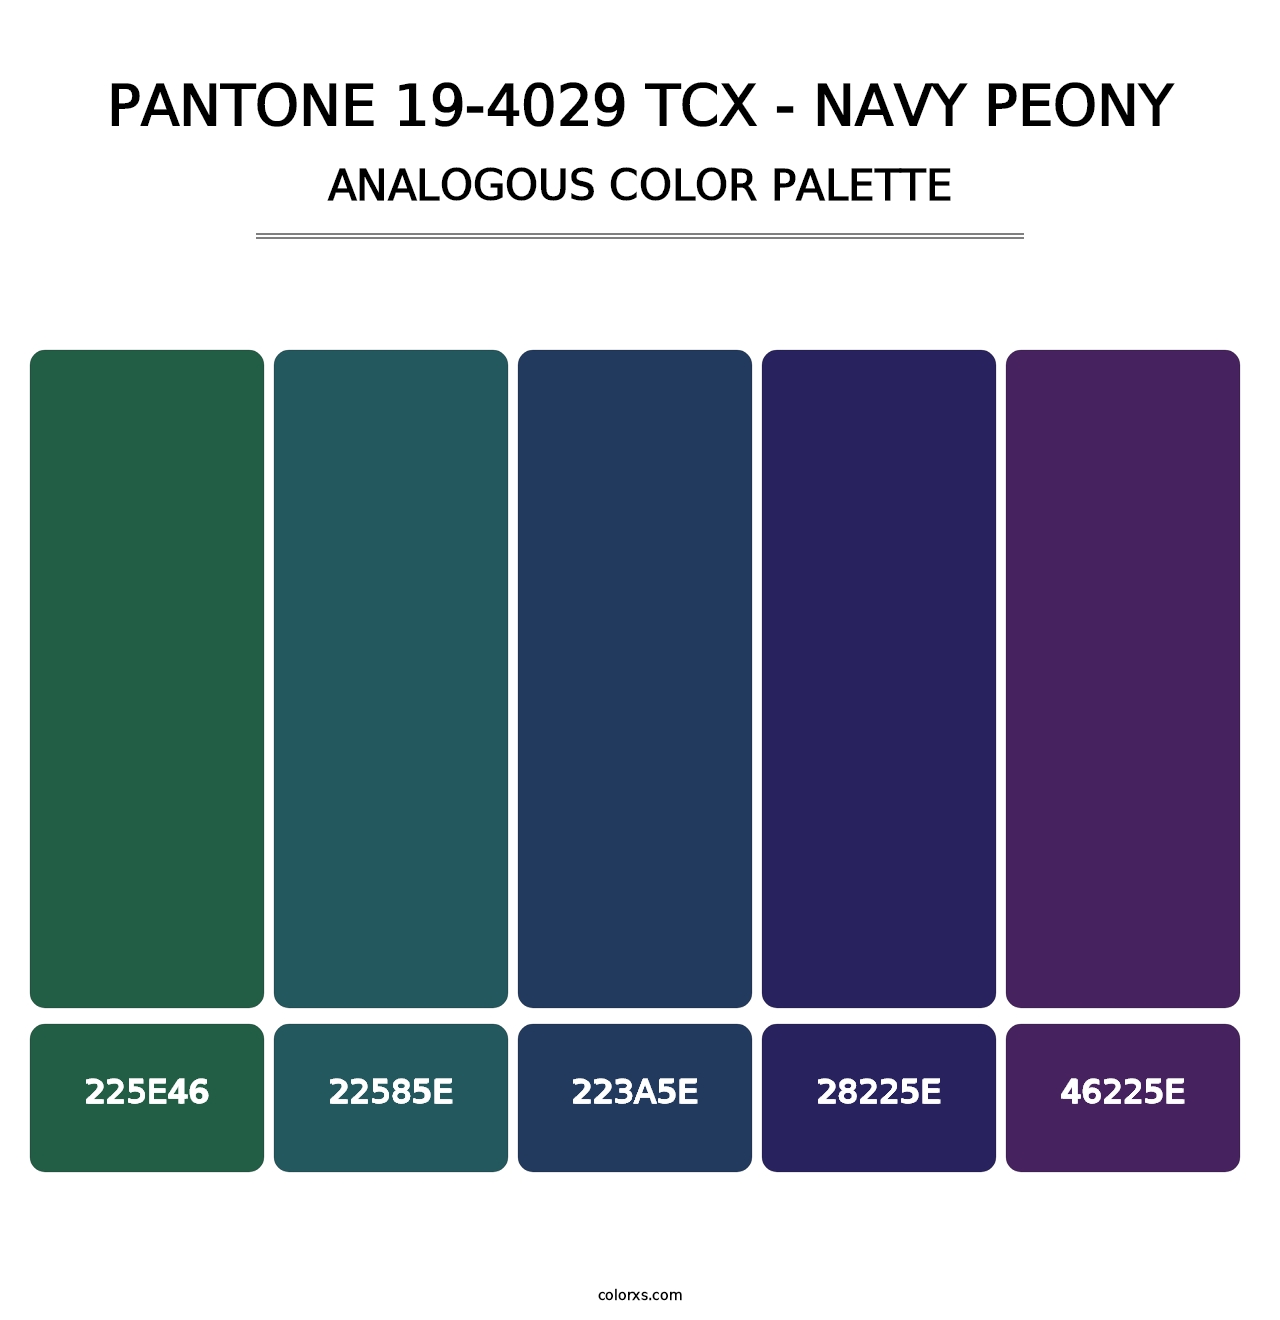 PANTONE 19-4029 TCX - Navy Peony - Analogous Color Palette